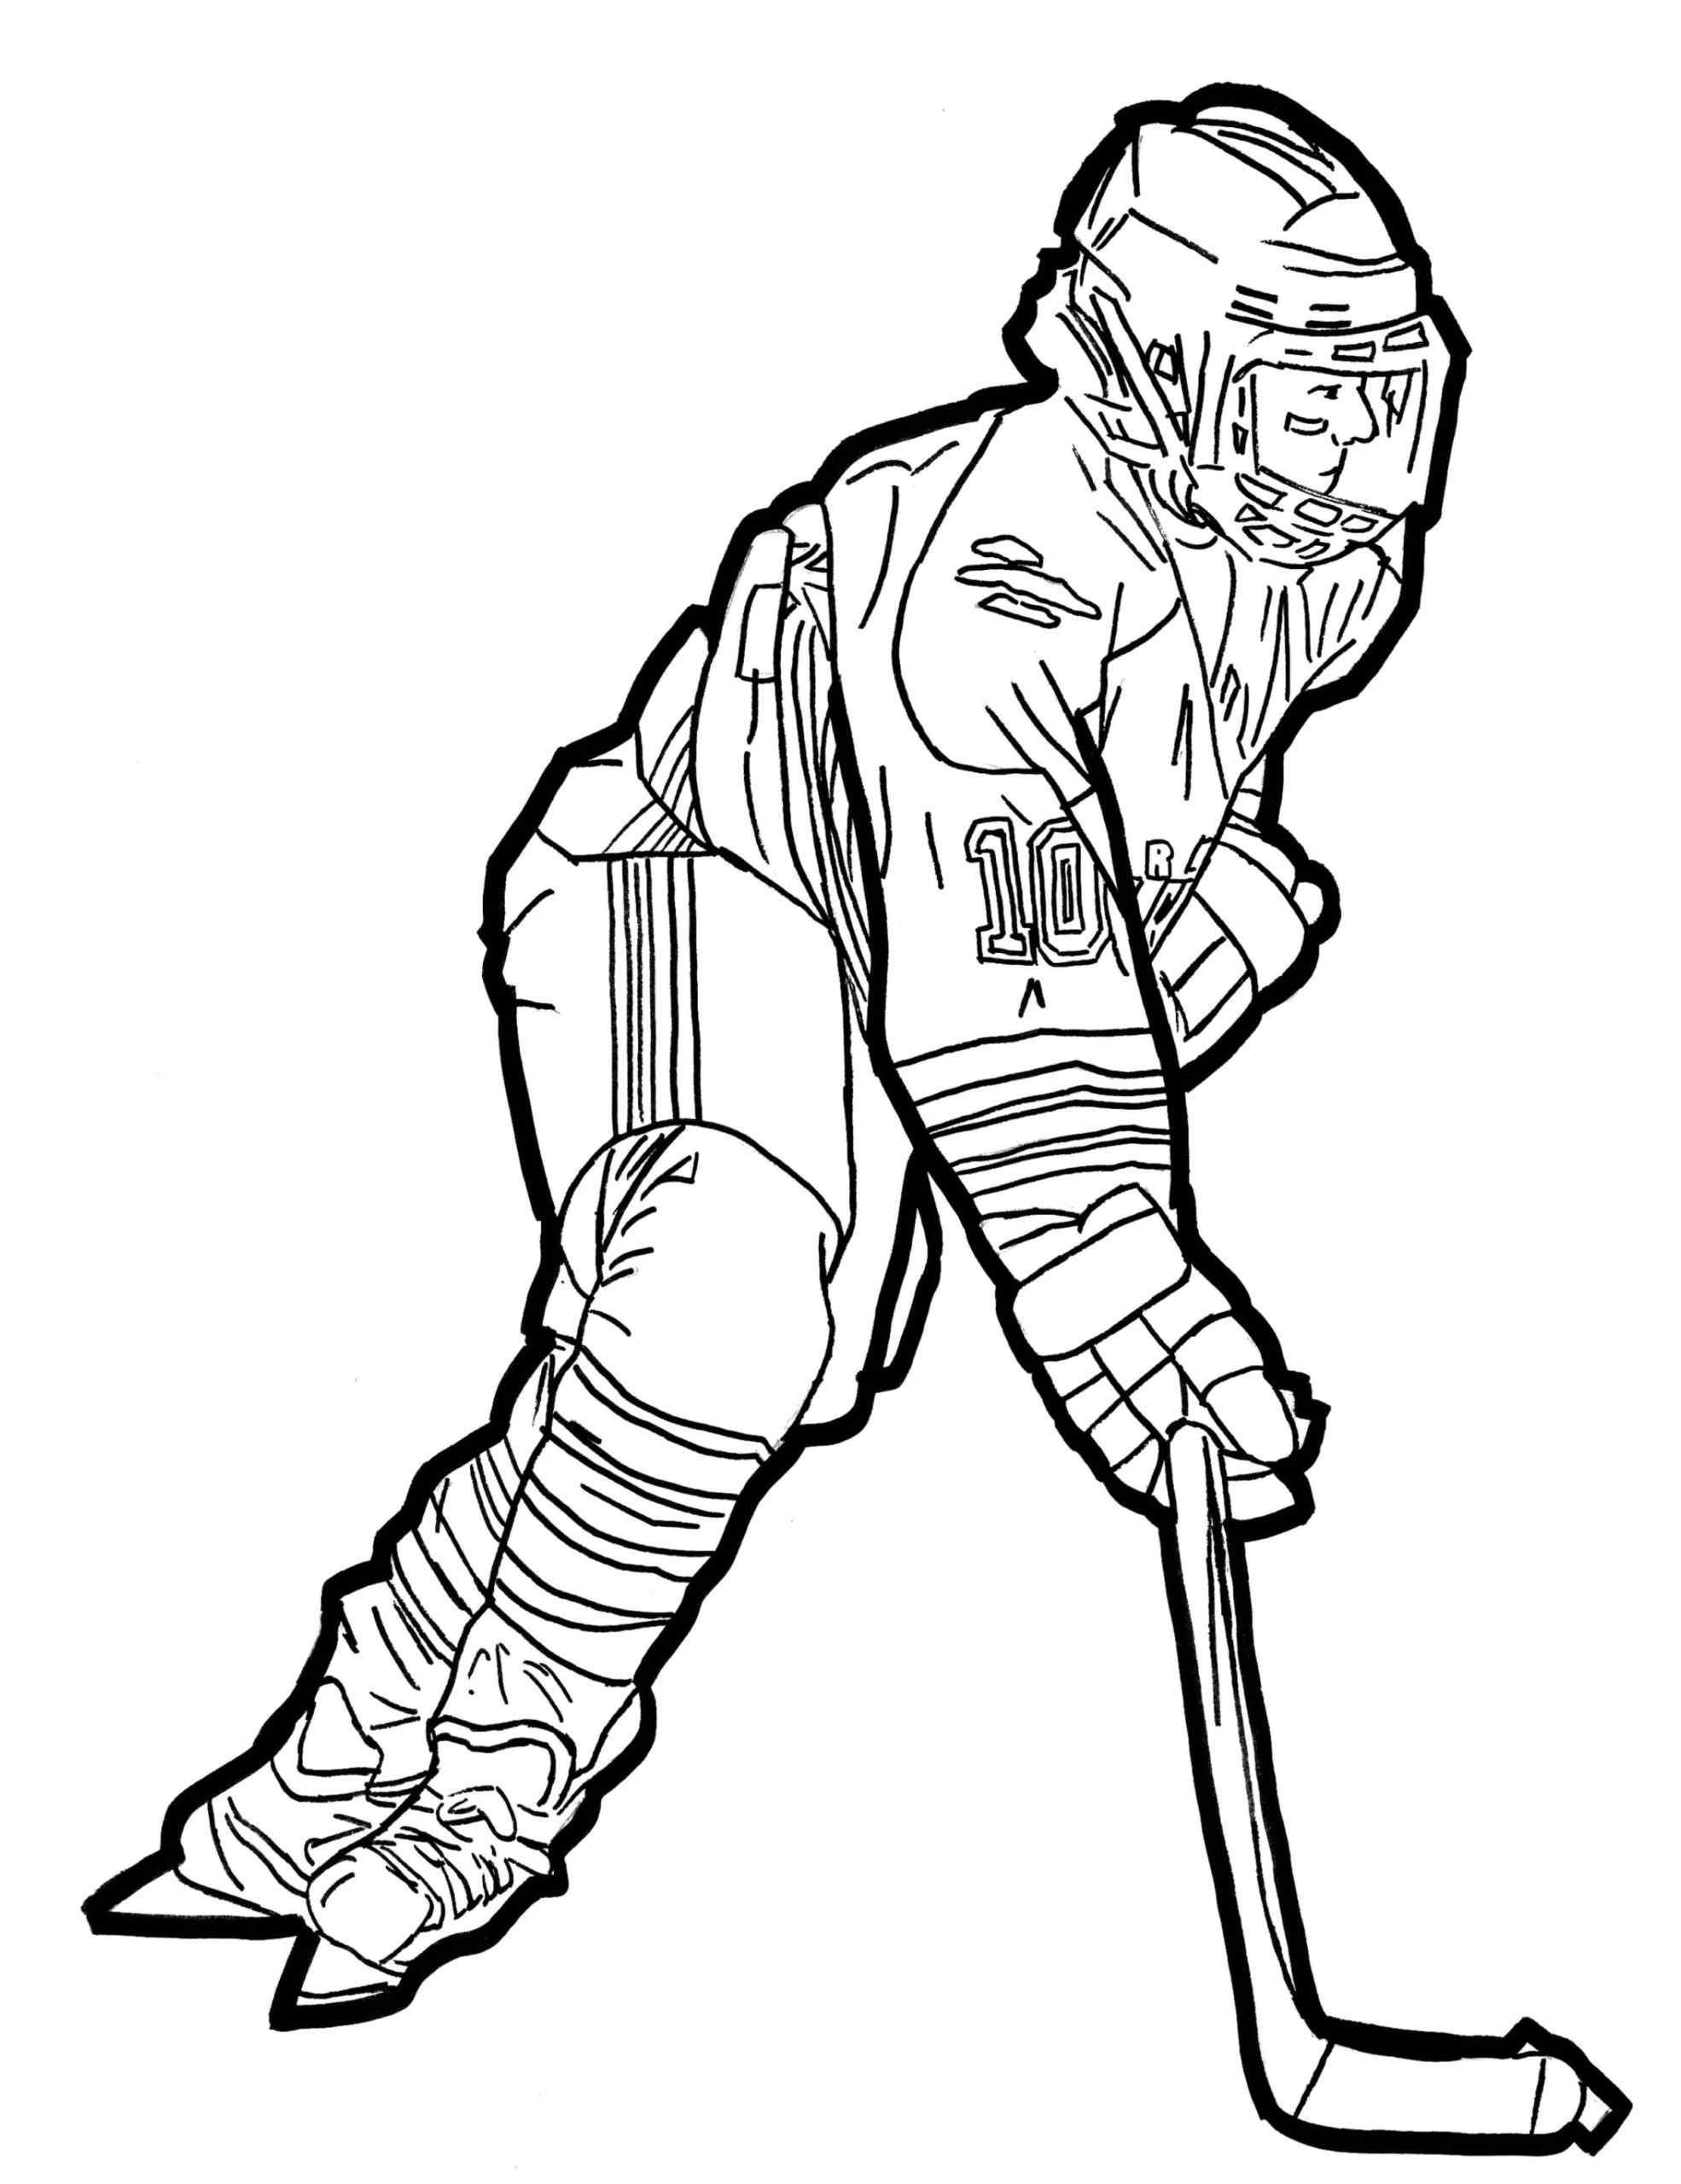 Hockey player In Full Uniform